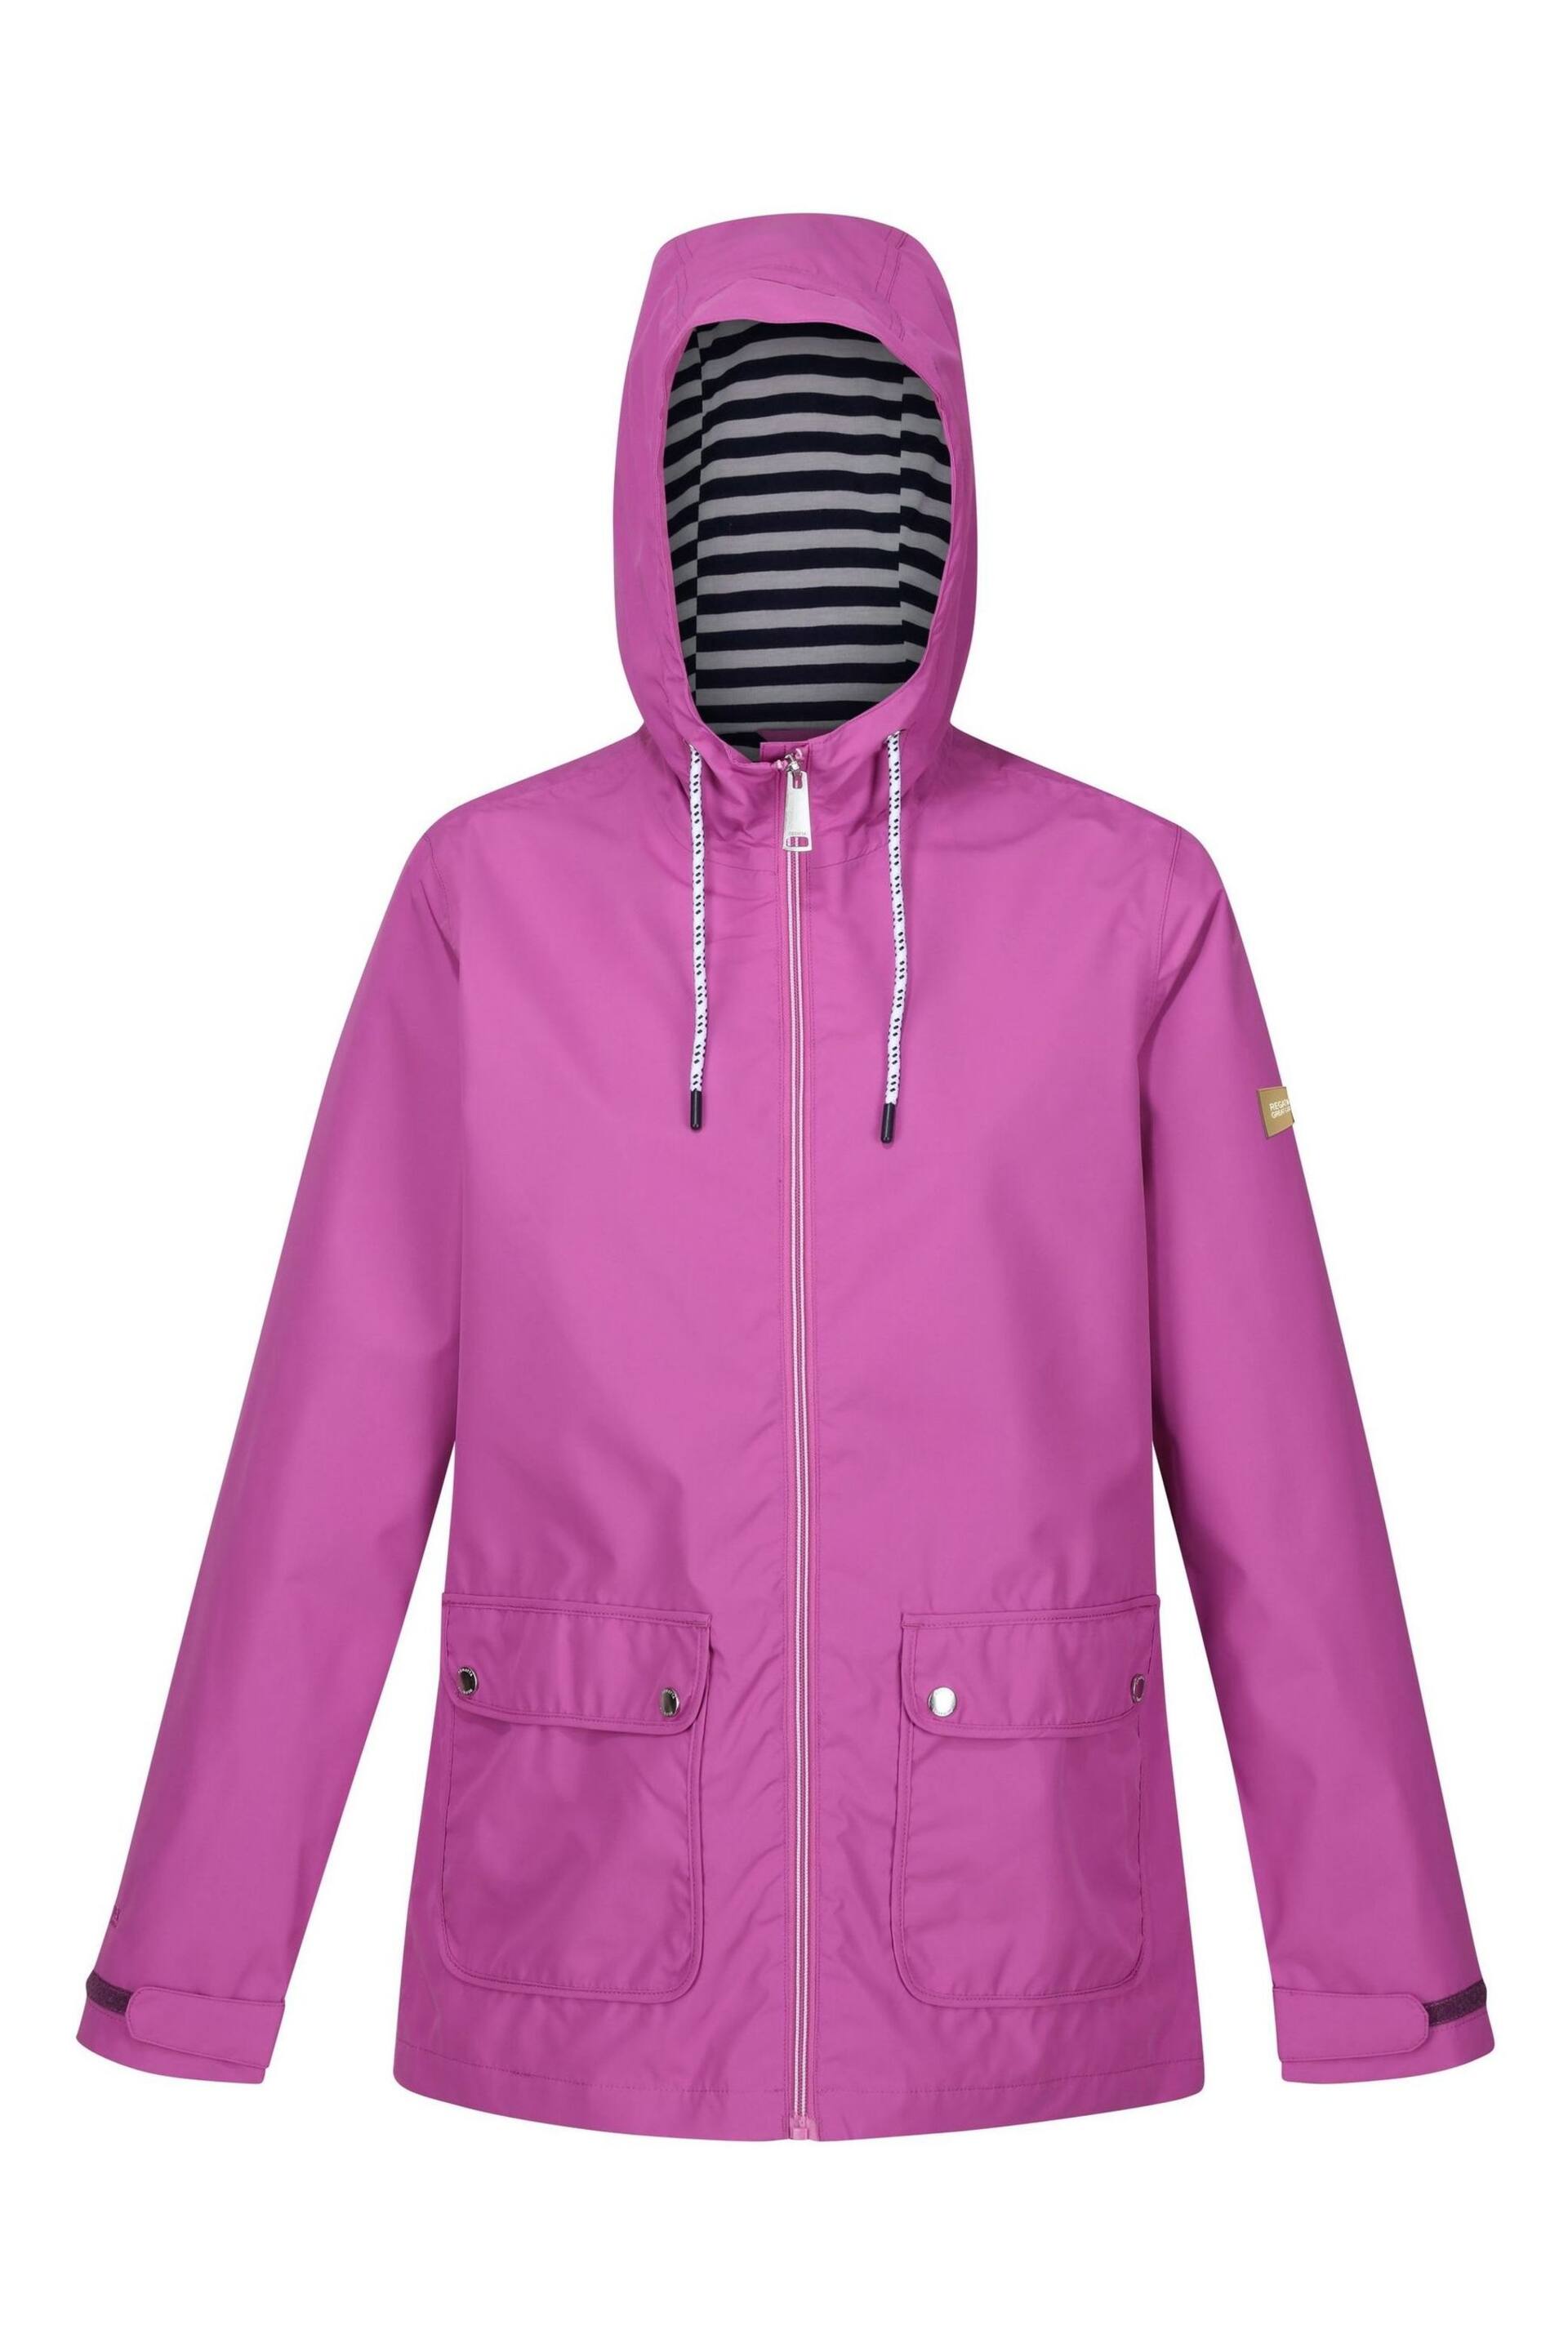 Regatta Purple Bayletta Waterproof Jacket - Image 7 of 9